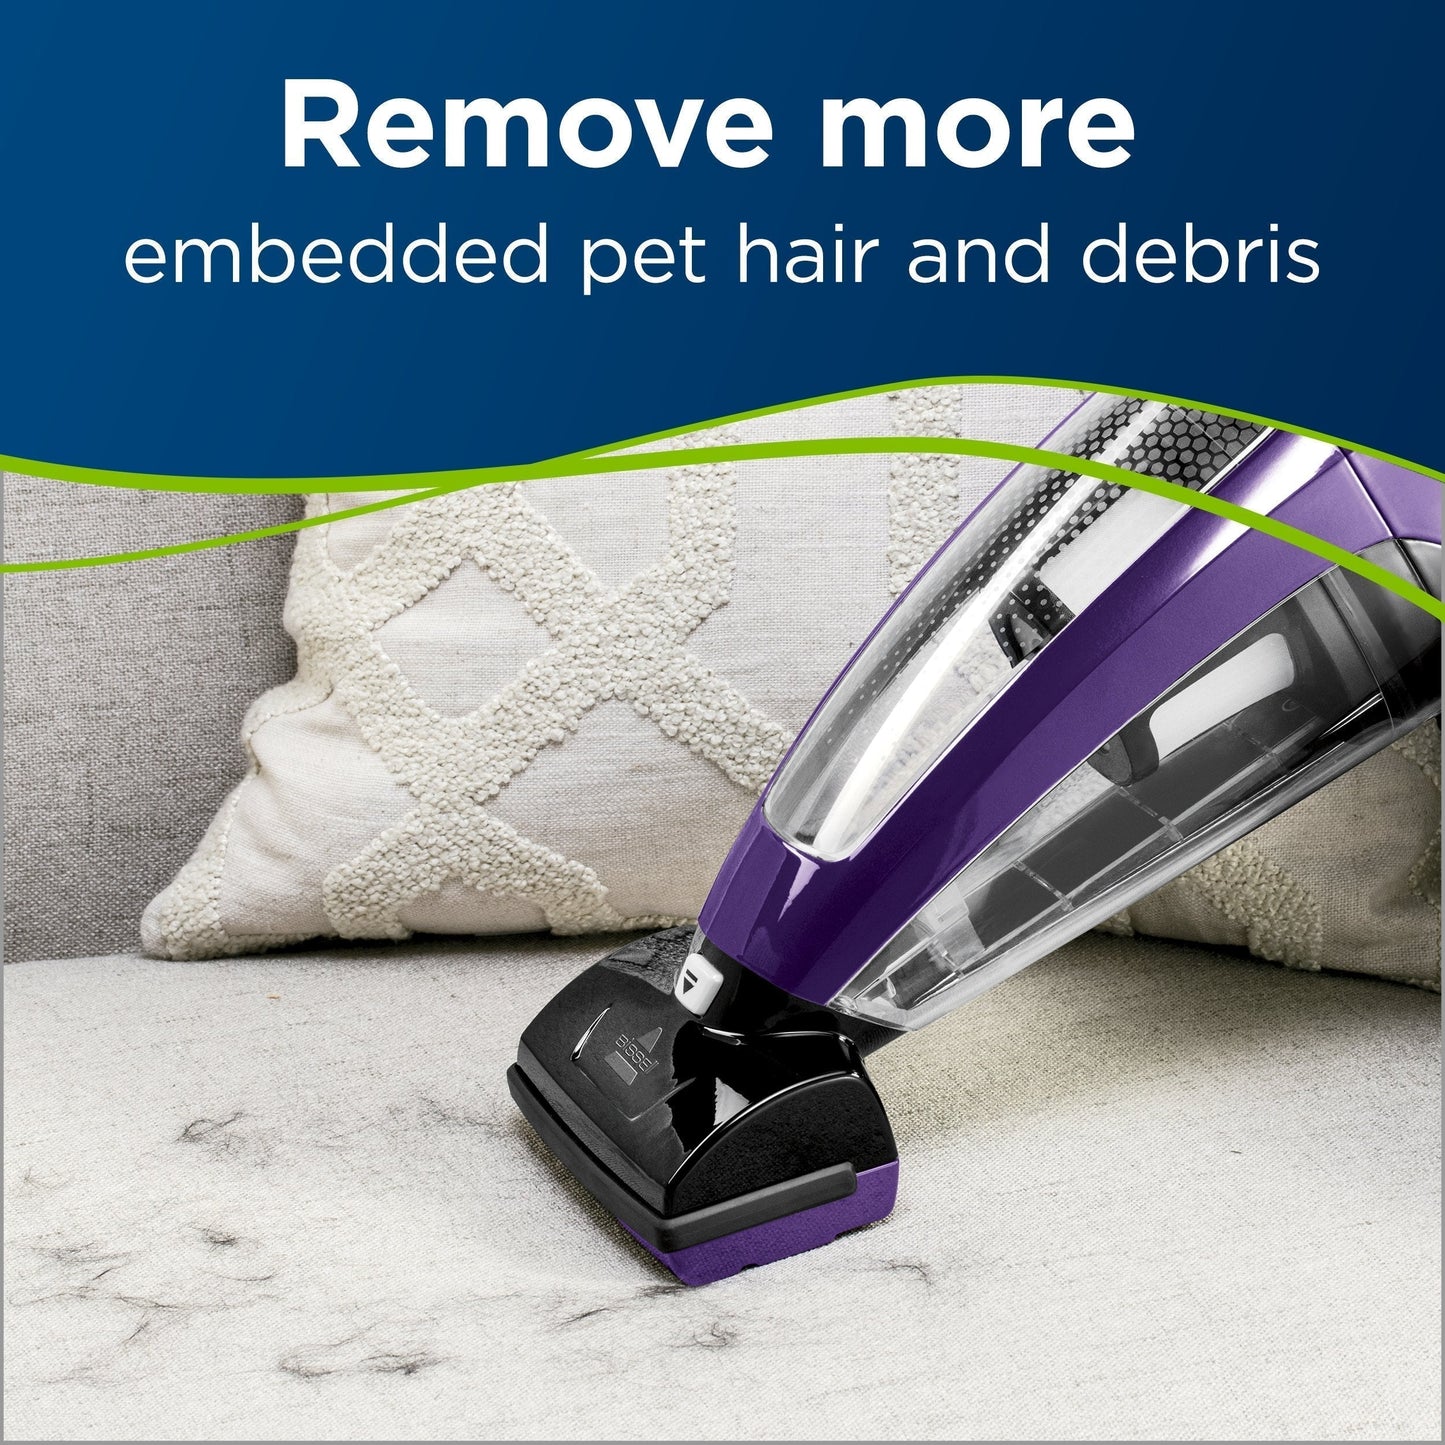 Bissell Pet Hair Eraser Lithium Ion Cordless Hand Vacuum - Purple